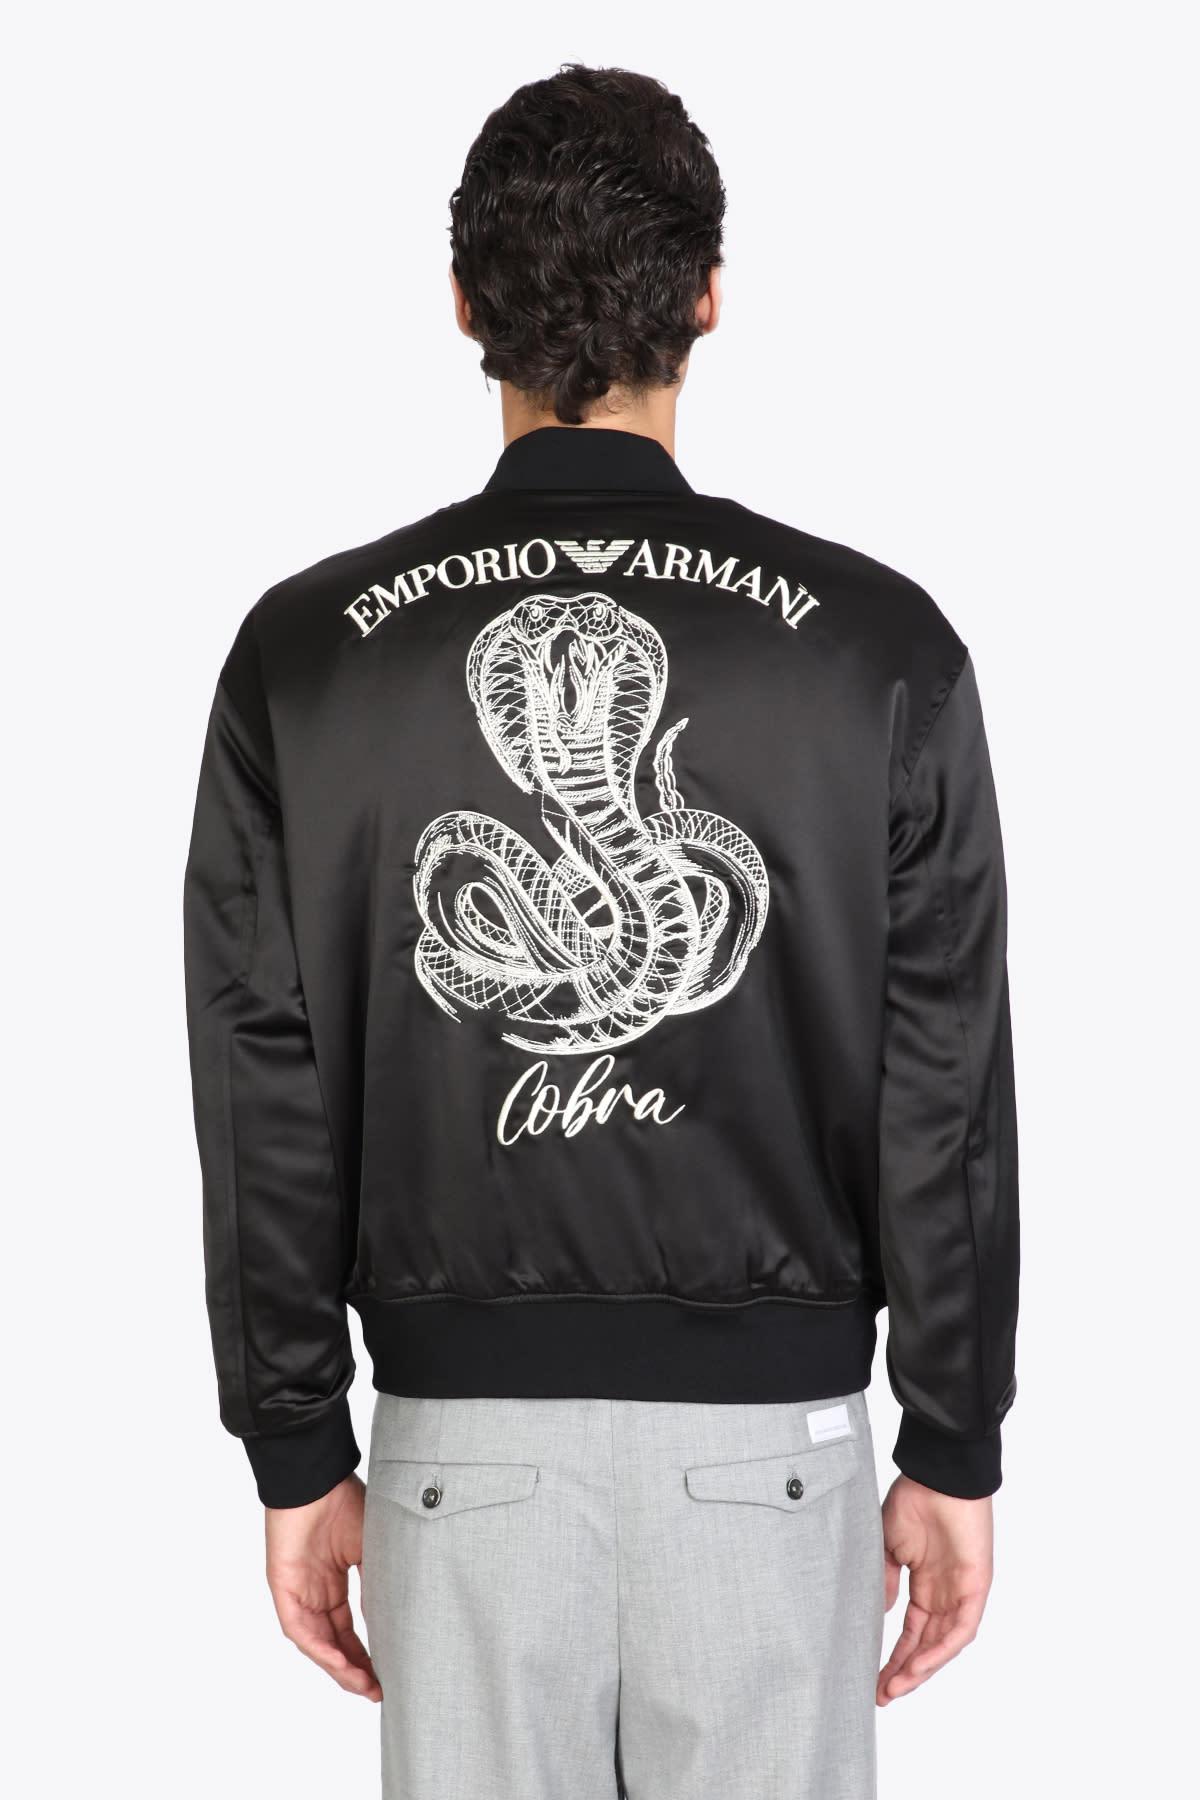 Emporio Armani Blouson Jacket Black Satin Bomber Jacket With Cobra  Embroidery. for Men | Lyst